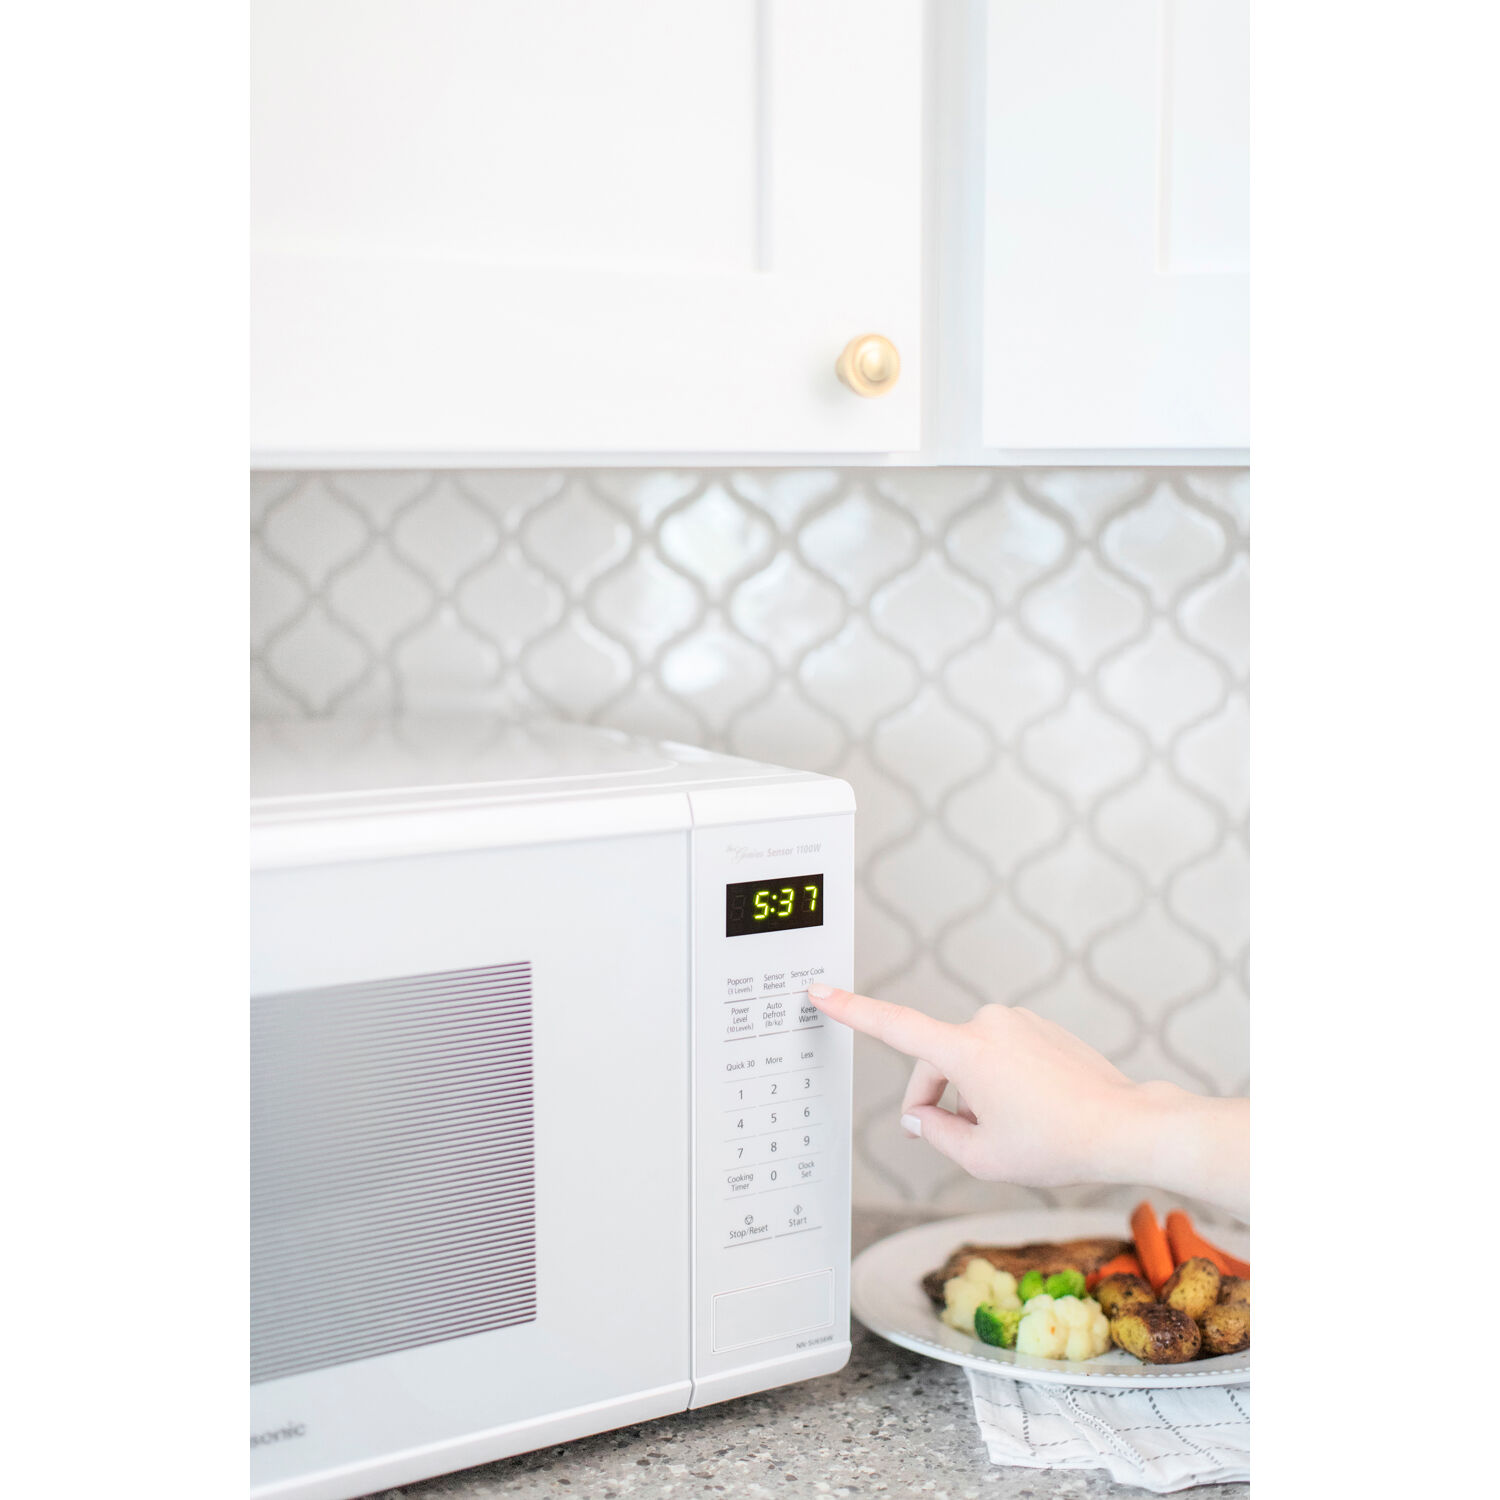 Panasonic  New 1.3 Cu. ft. 1100W Genius Sensor Countertop Microwave Oven in White - image 5 of 7